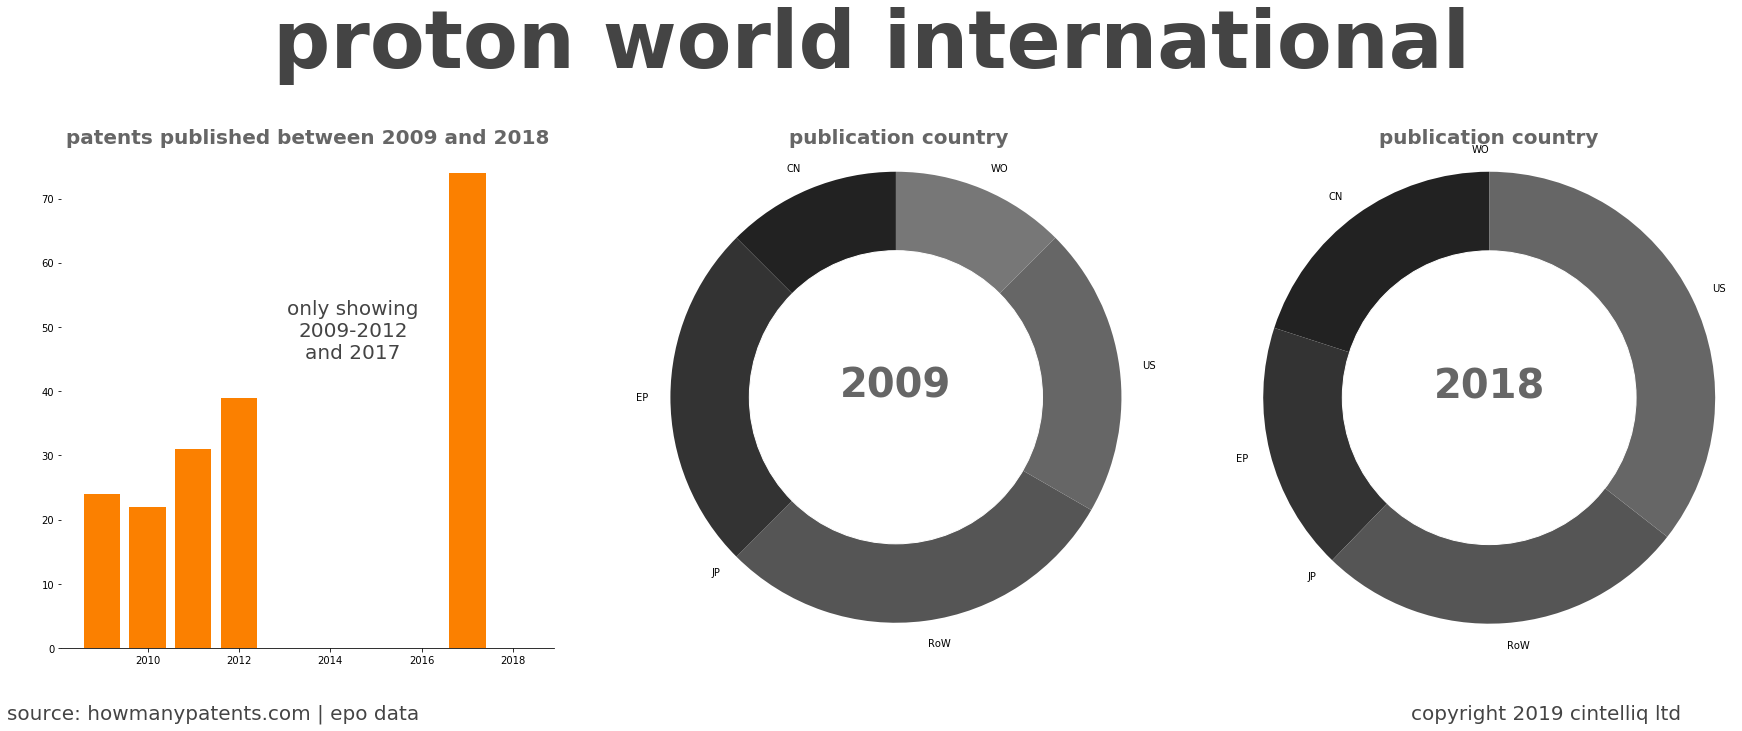 summary of patents for Proton World International